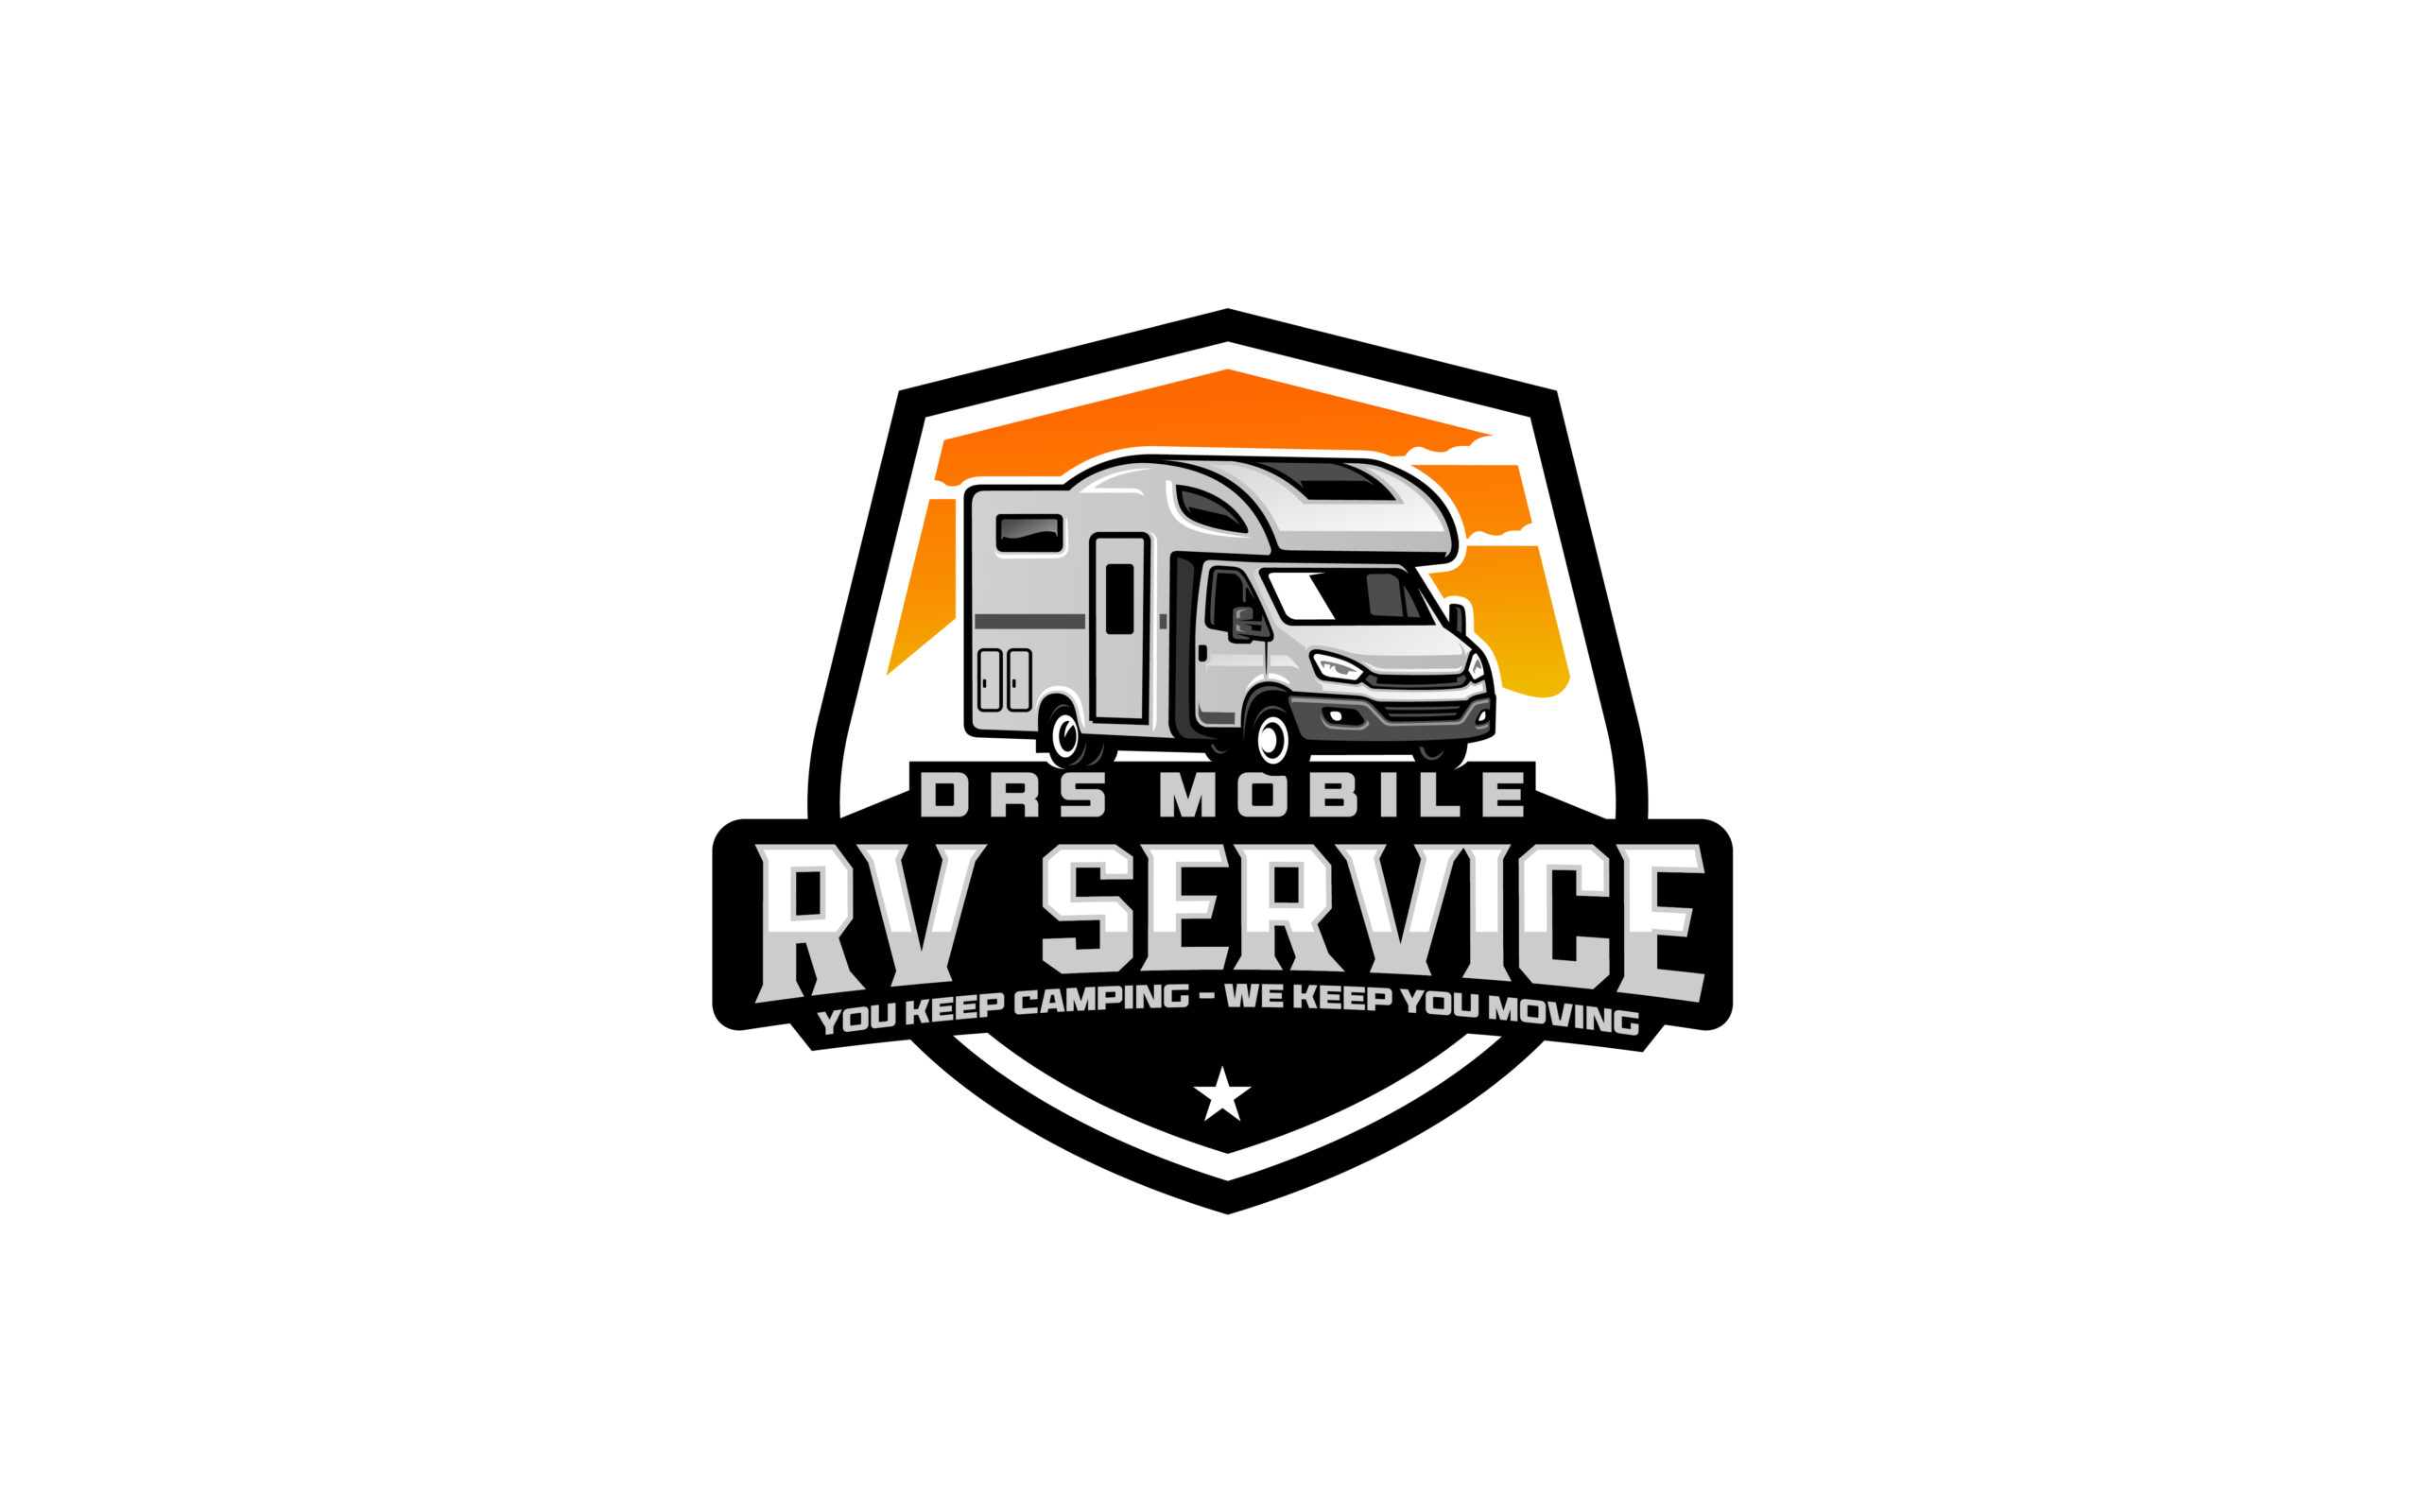 DRS Mobil RV Service